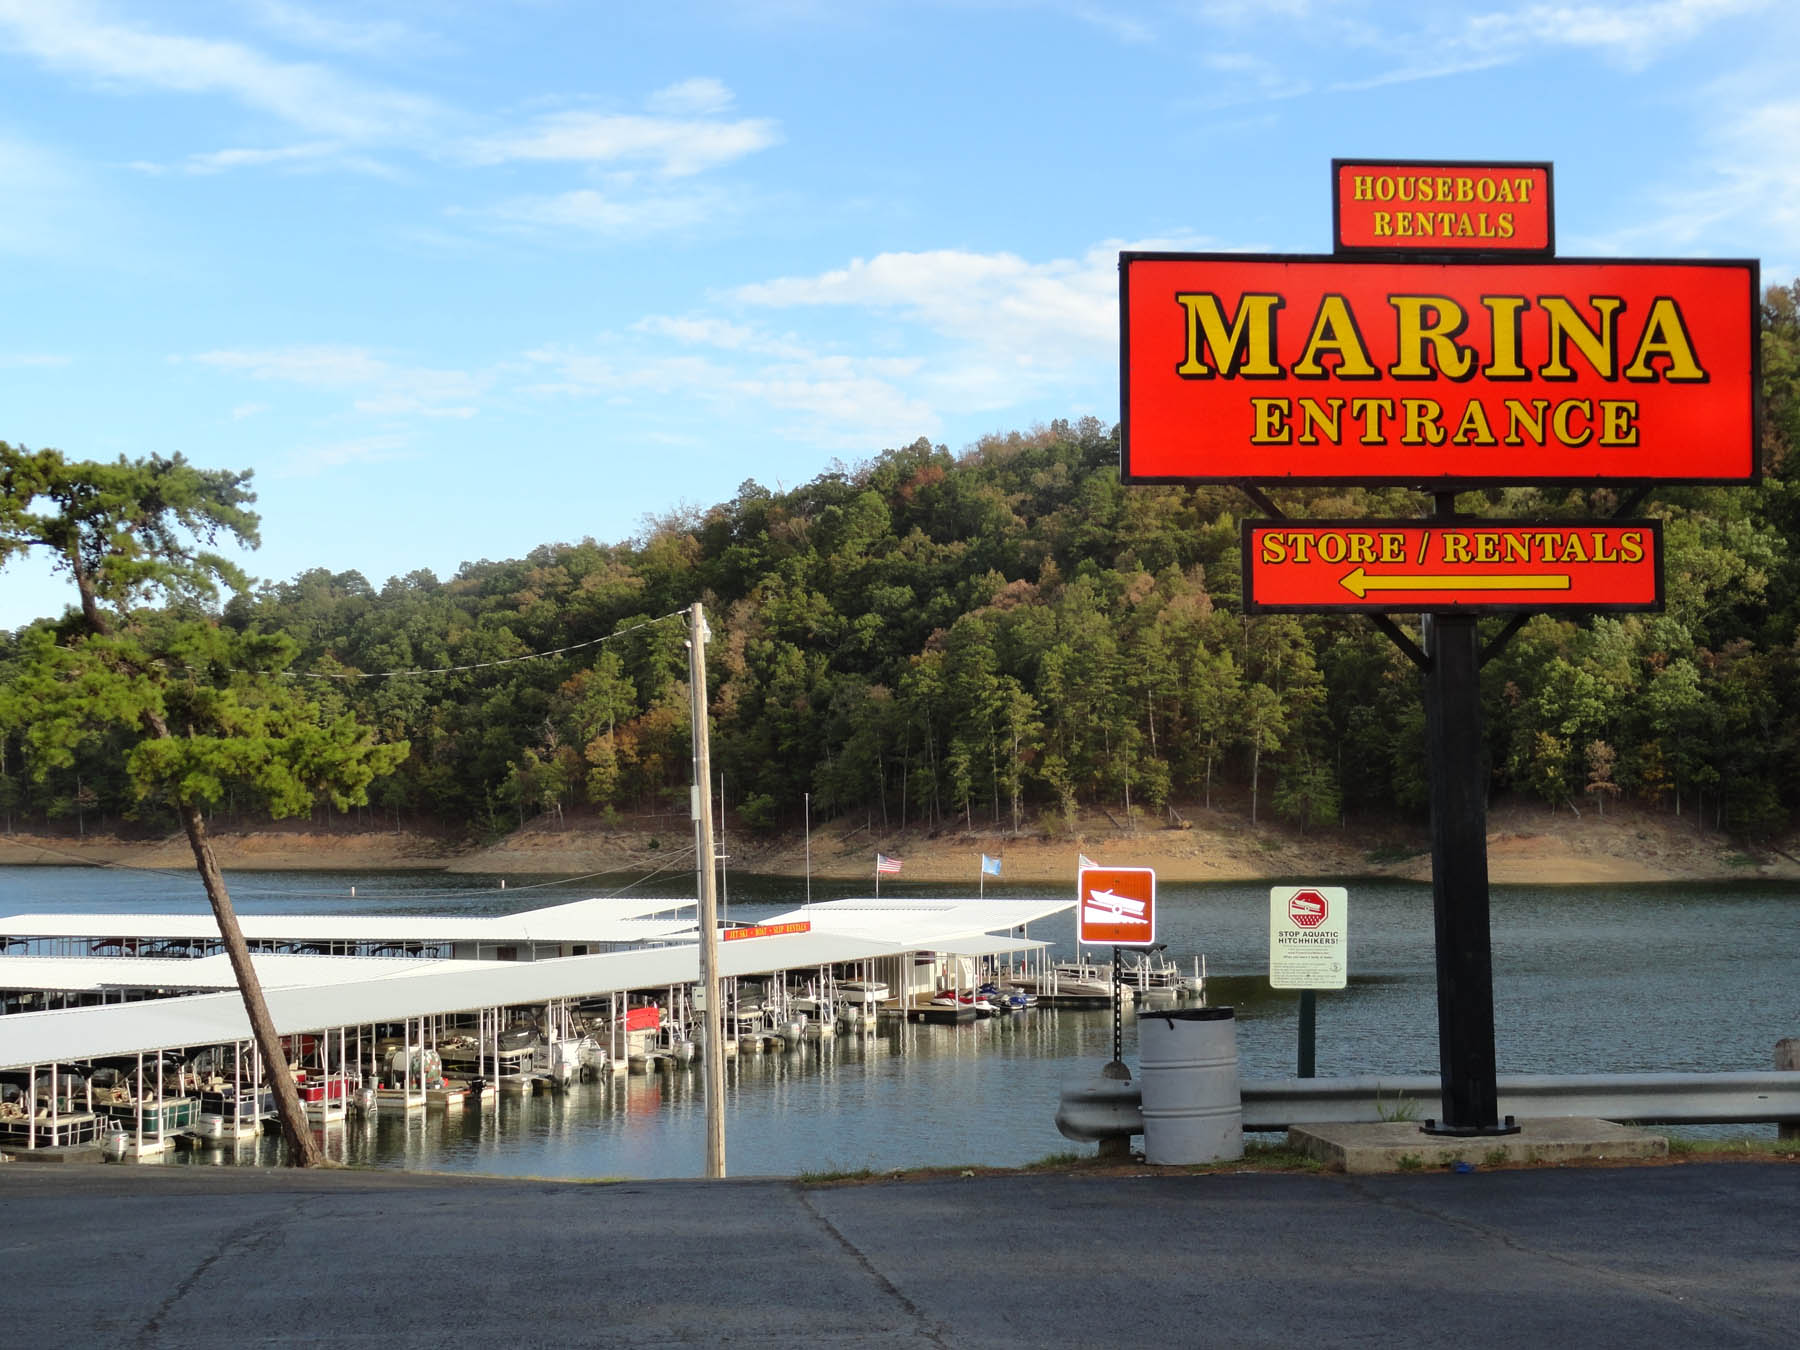 Sign for marina reading "Marina Entrance: Houseboat Rentals, Store/Rentals".